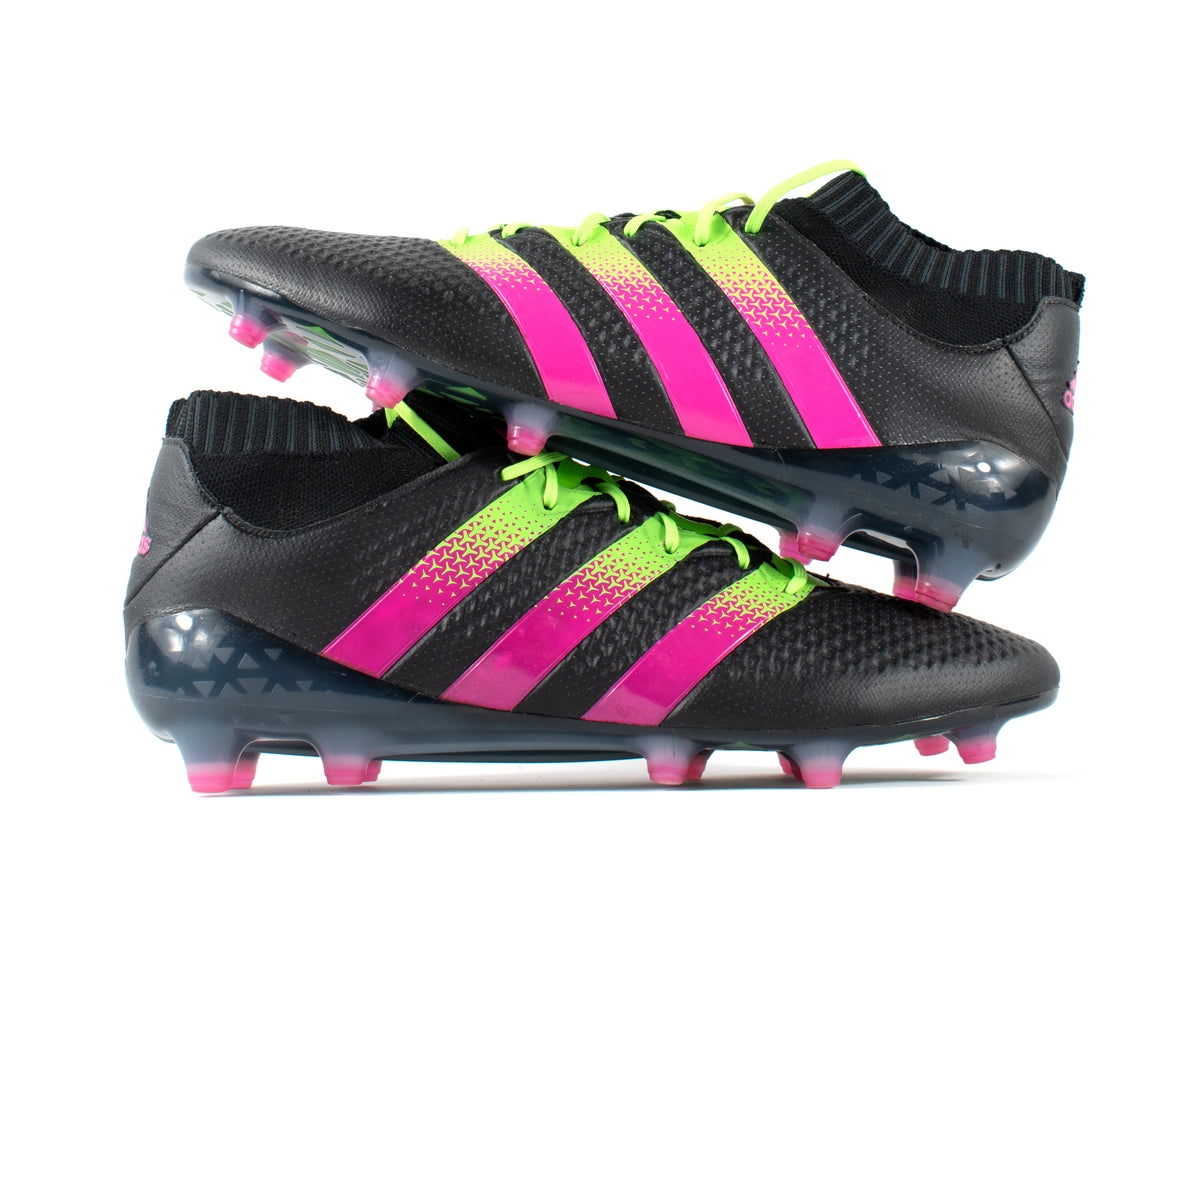 Adidas Ace Primeknit FG – Soccer Cleats